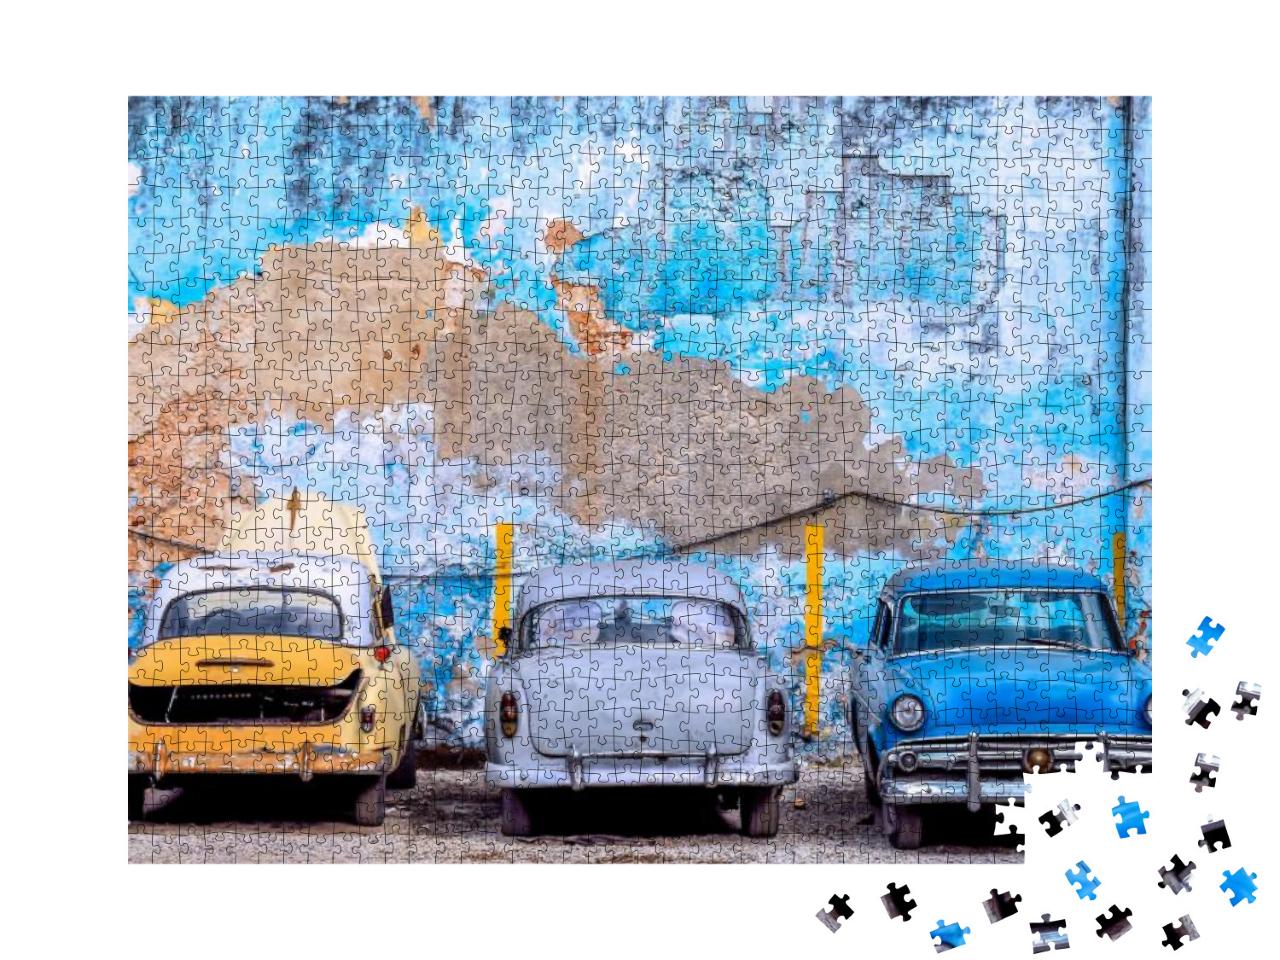 Puzzle 1000 Teile „Alte Autos auf Kuba“